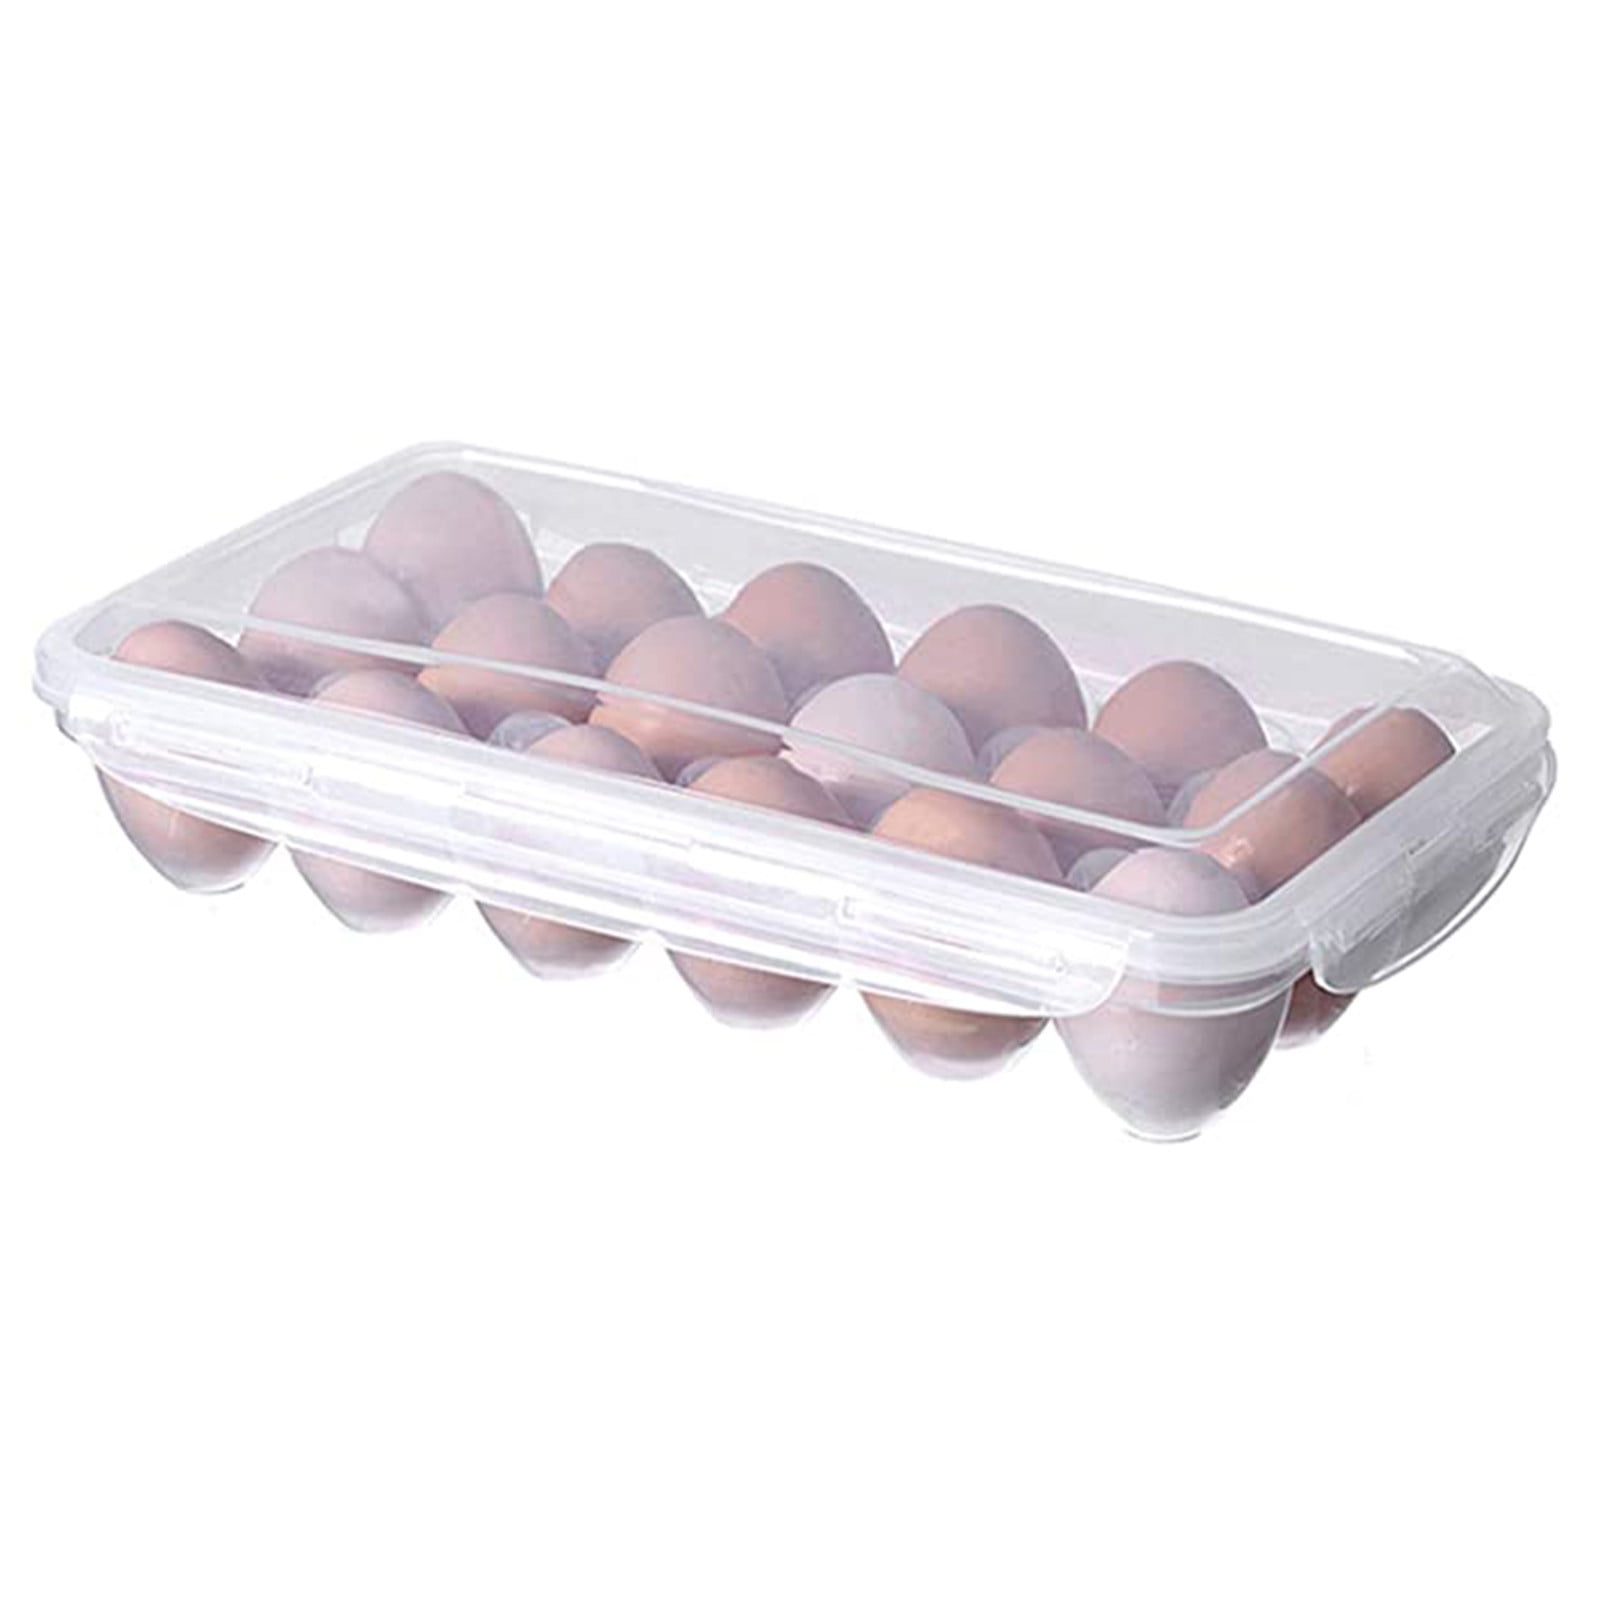 Egg Holder Tray Storage Refrigerator Fridge Eggs Box Case Container Plastic FOR 